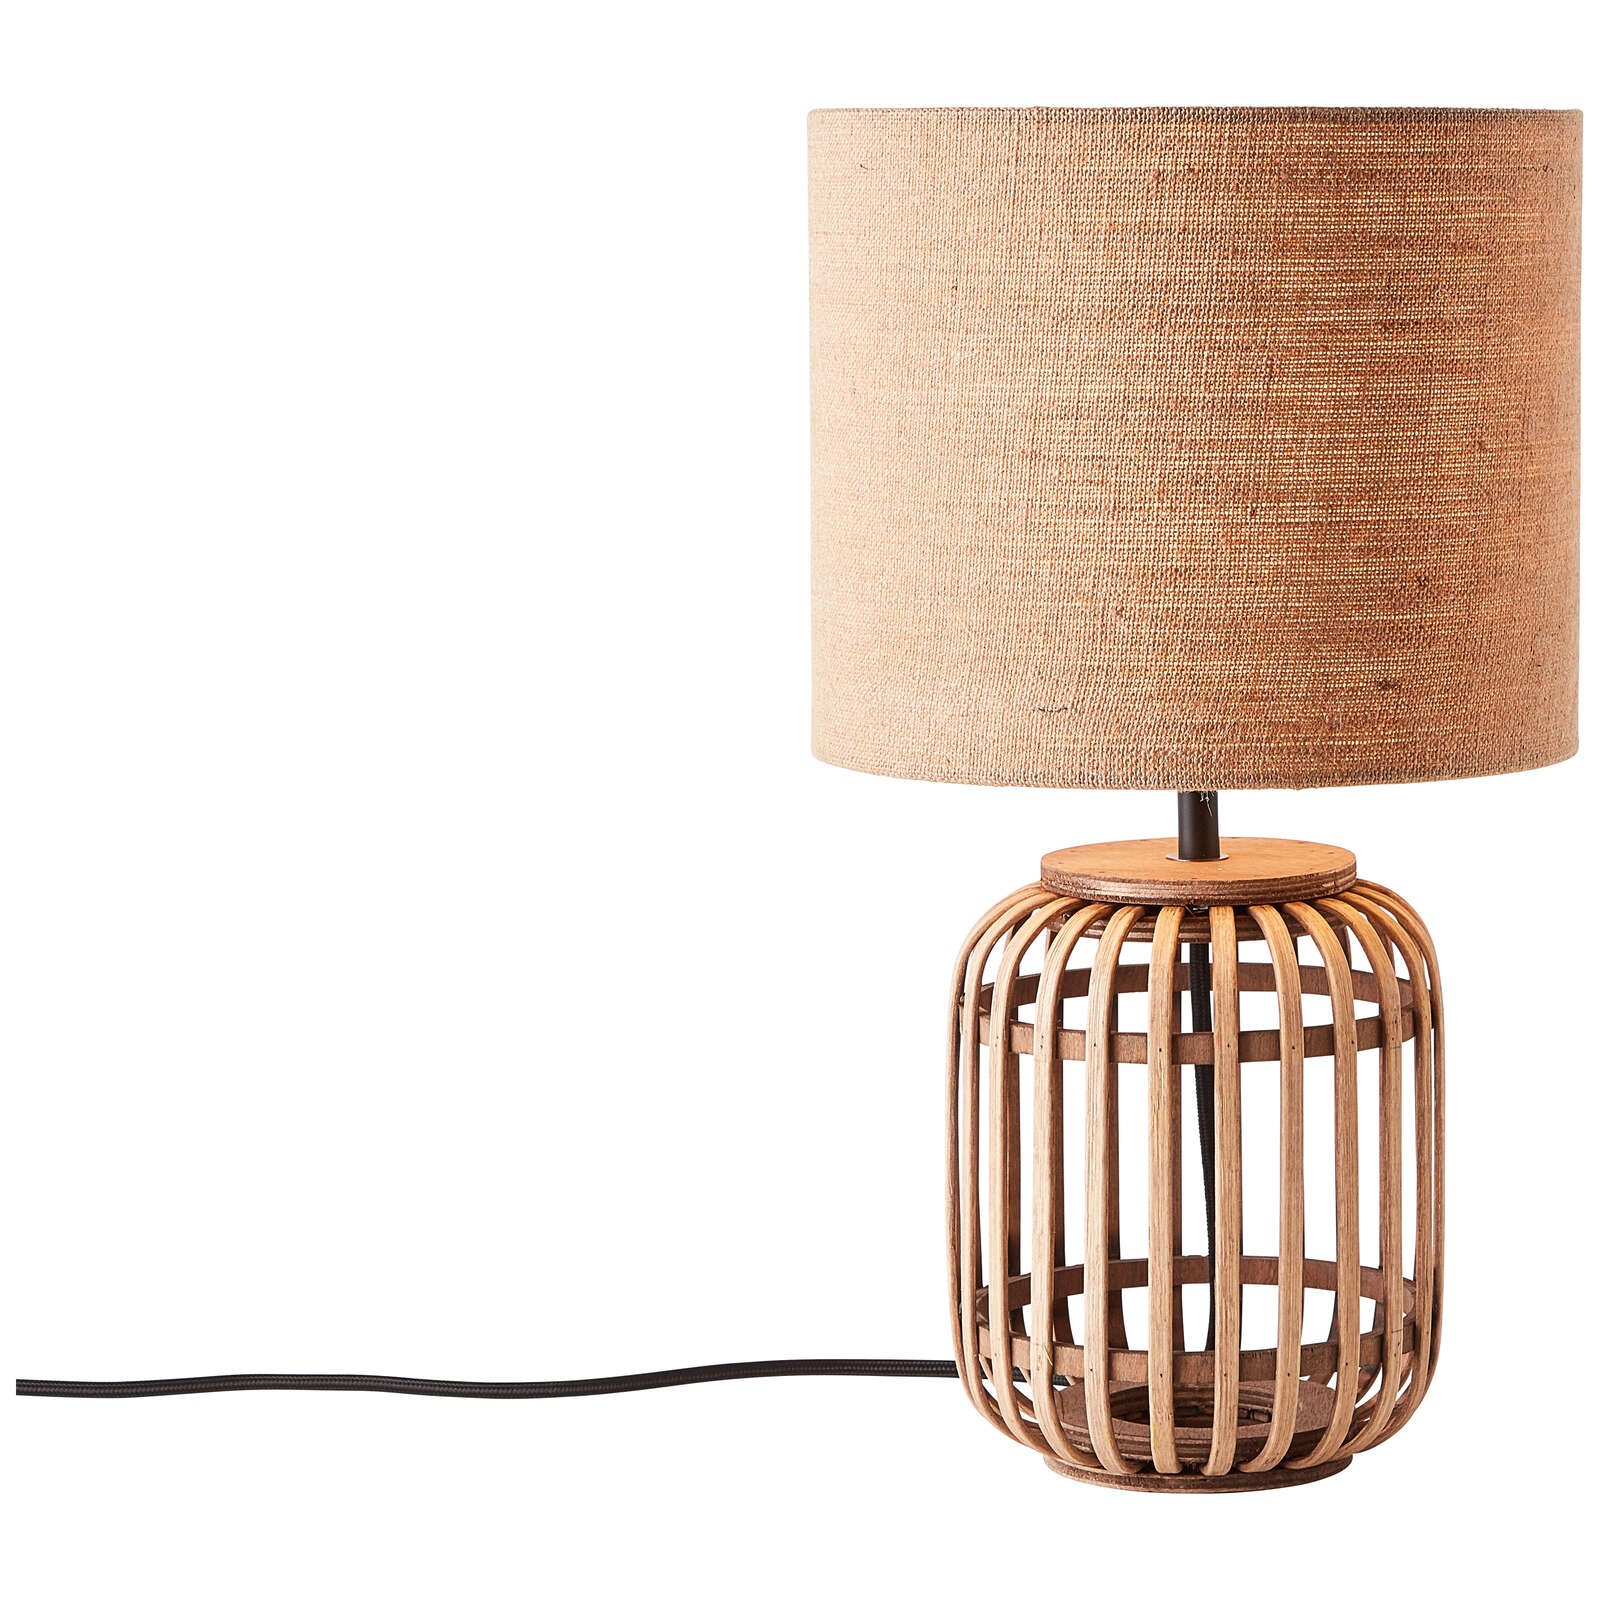             Bamboe tafellamp - Willi 1 - Bruin
        